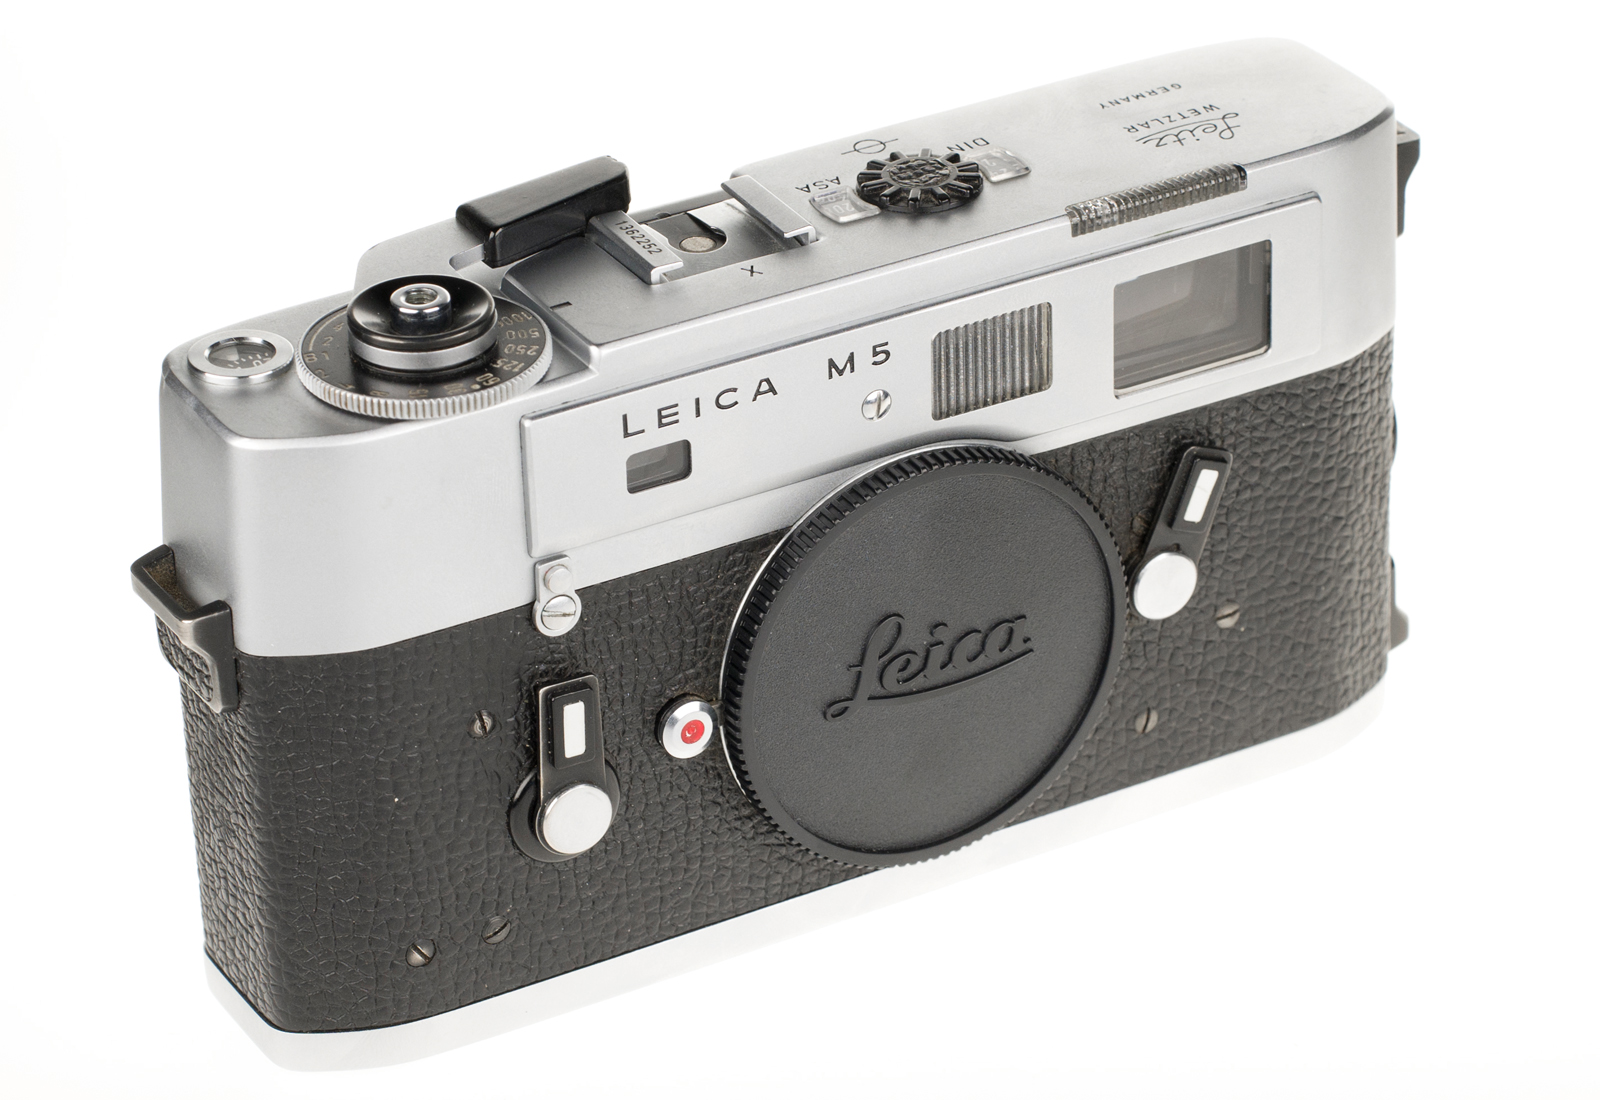 Leica M5, silbern verchromt